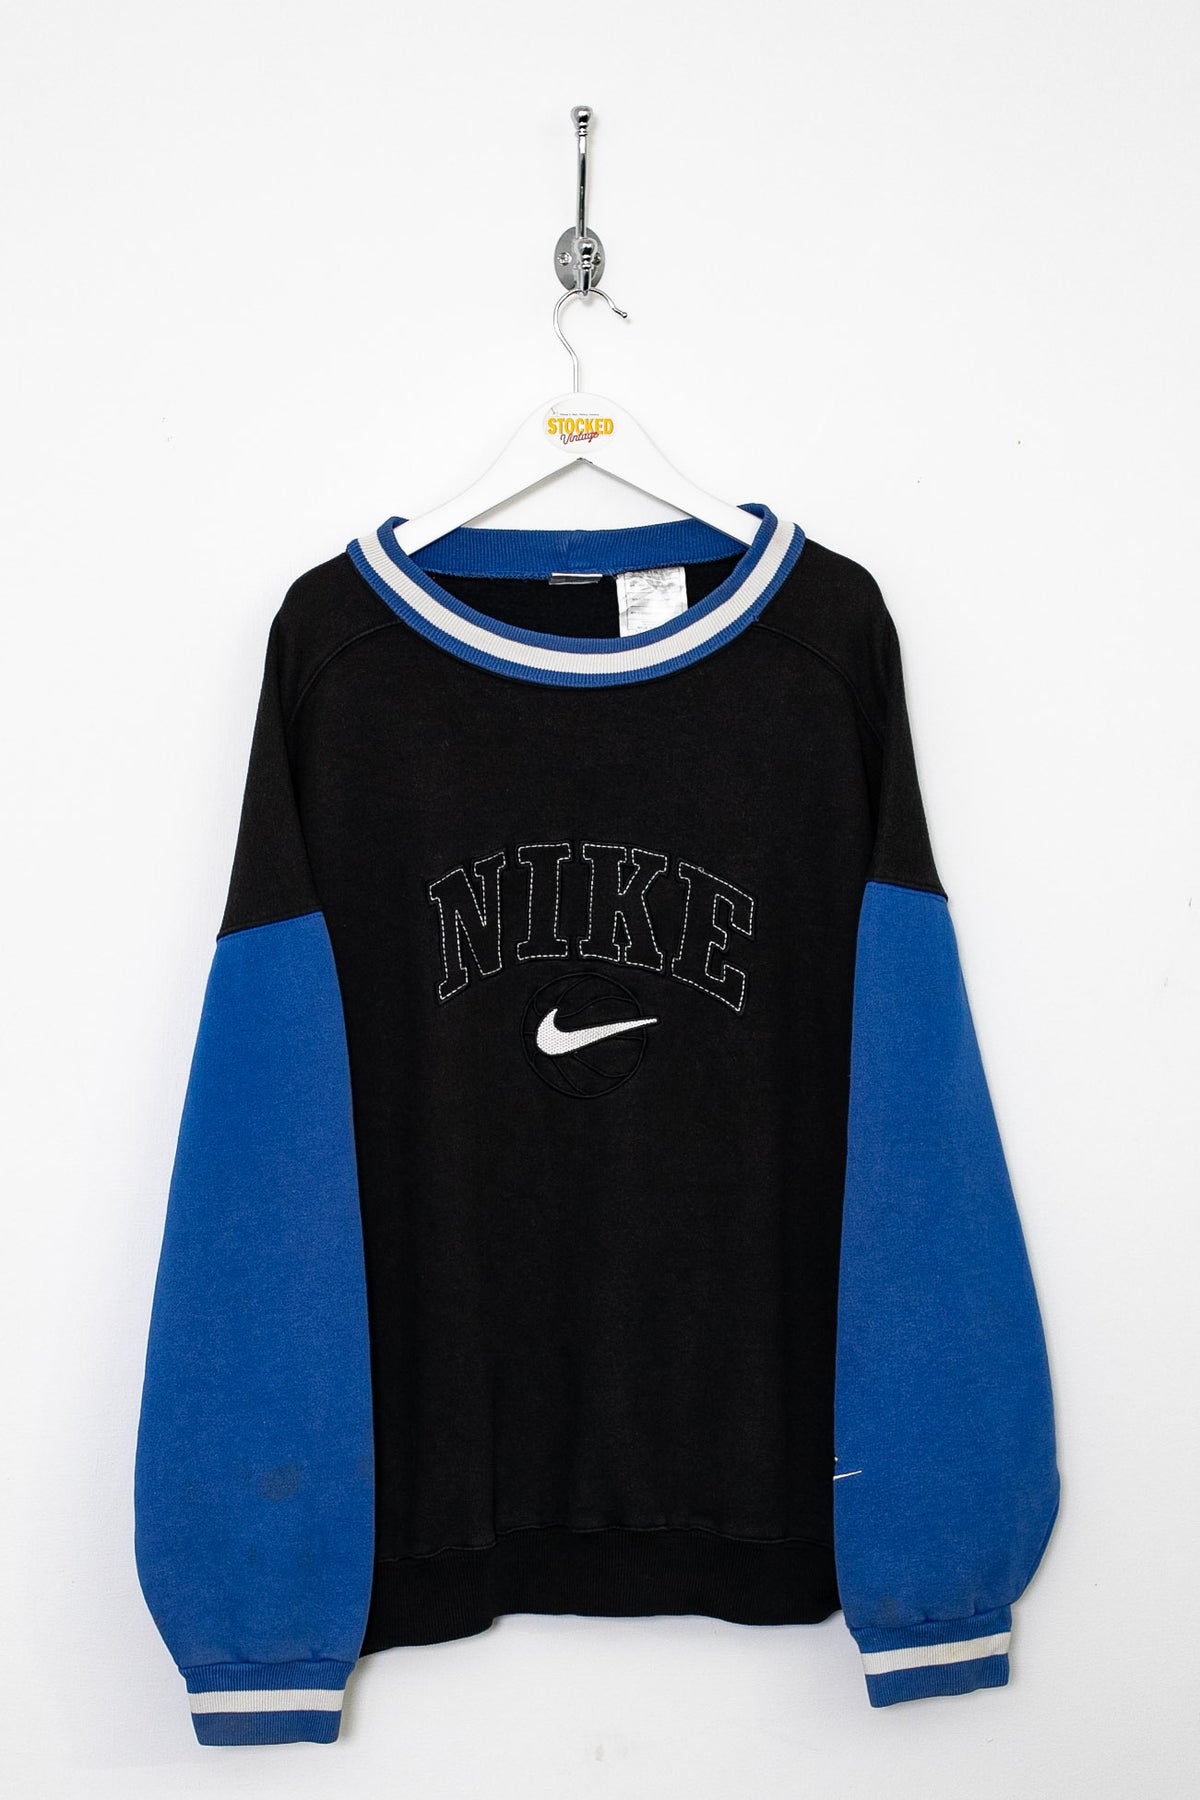 90s Nike Sweatshirt (L)